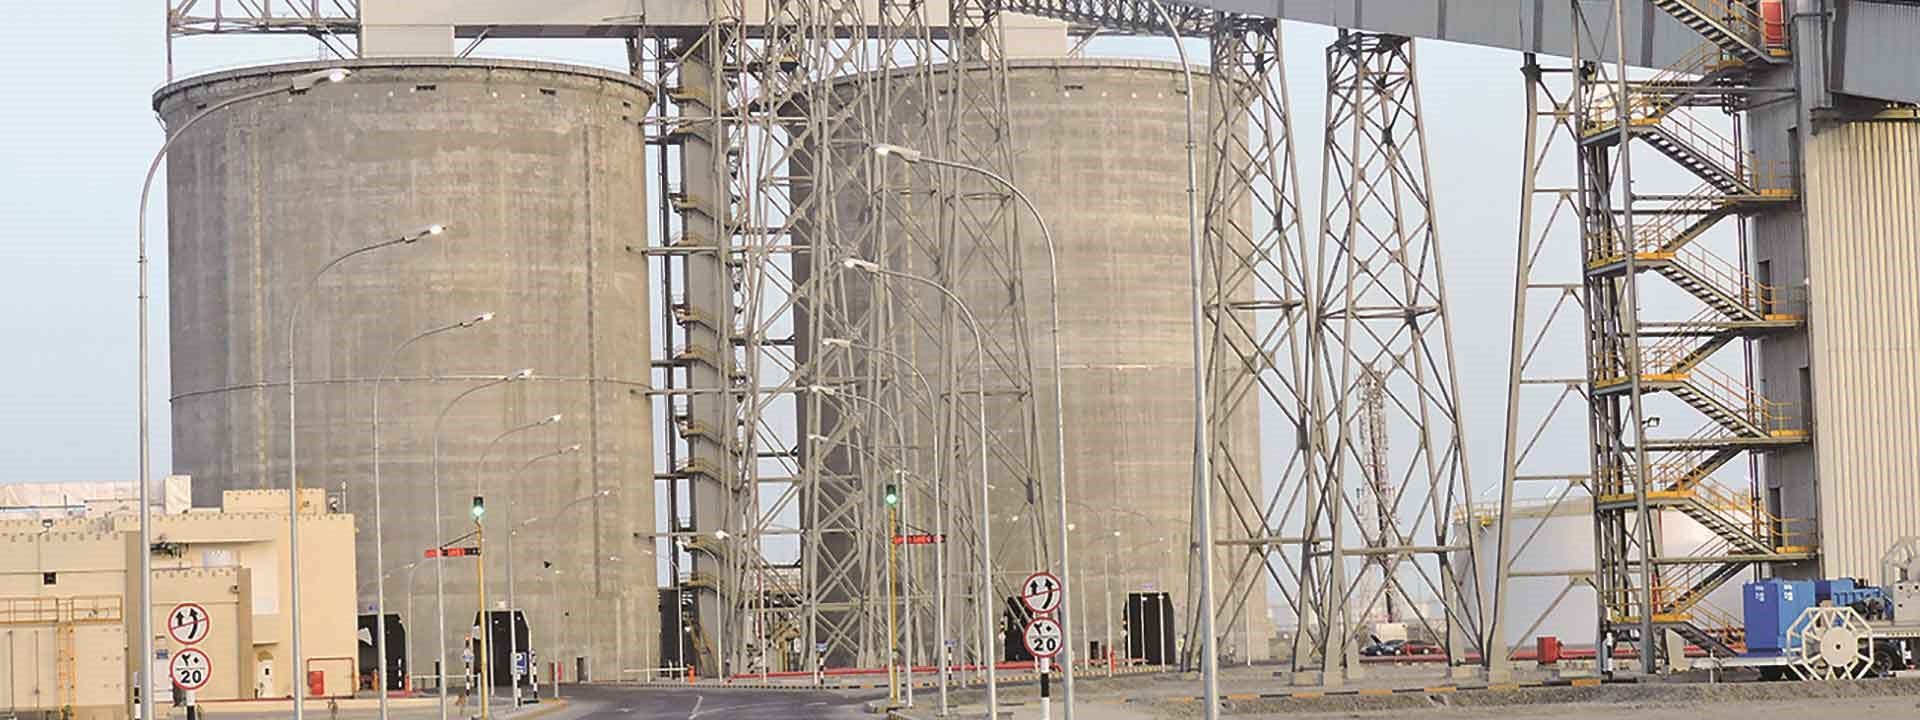 Petroleum storage facility in Oman- L&T Construction